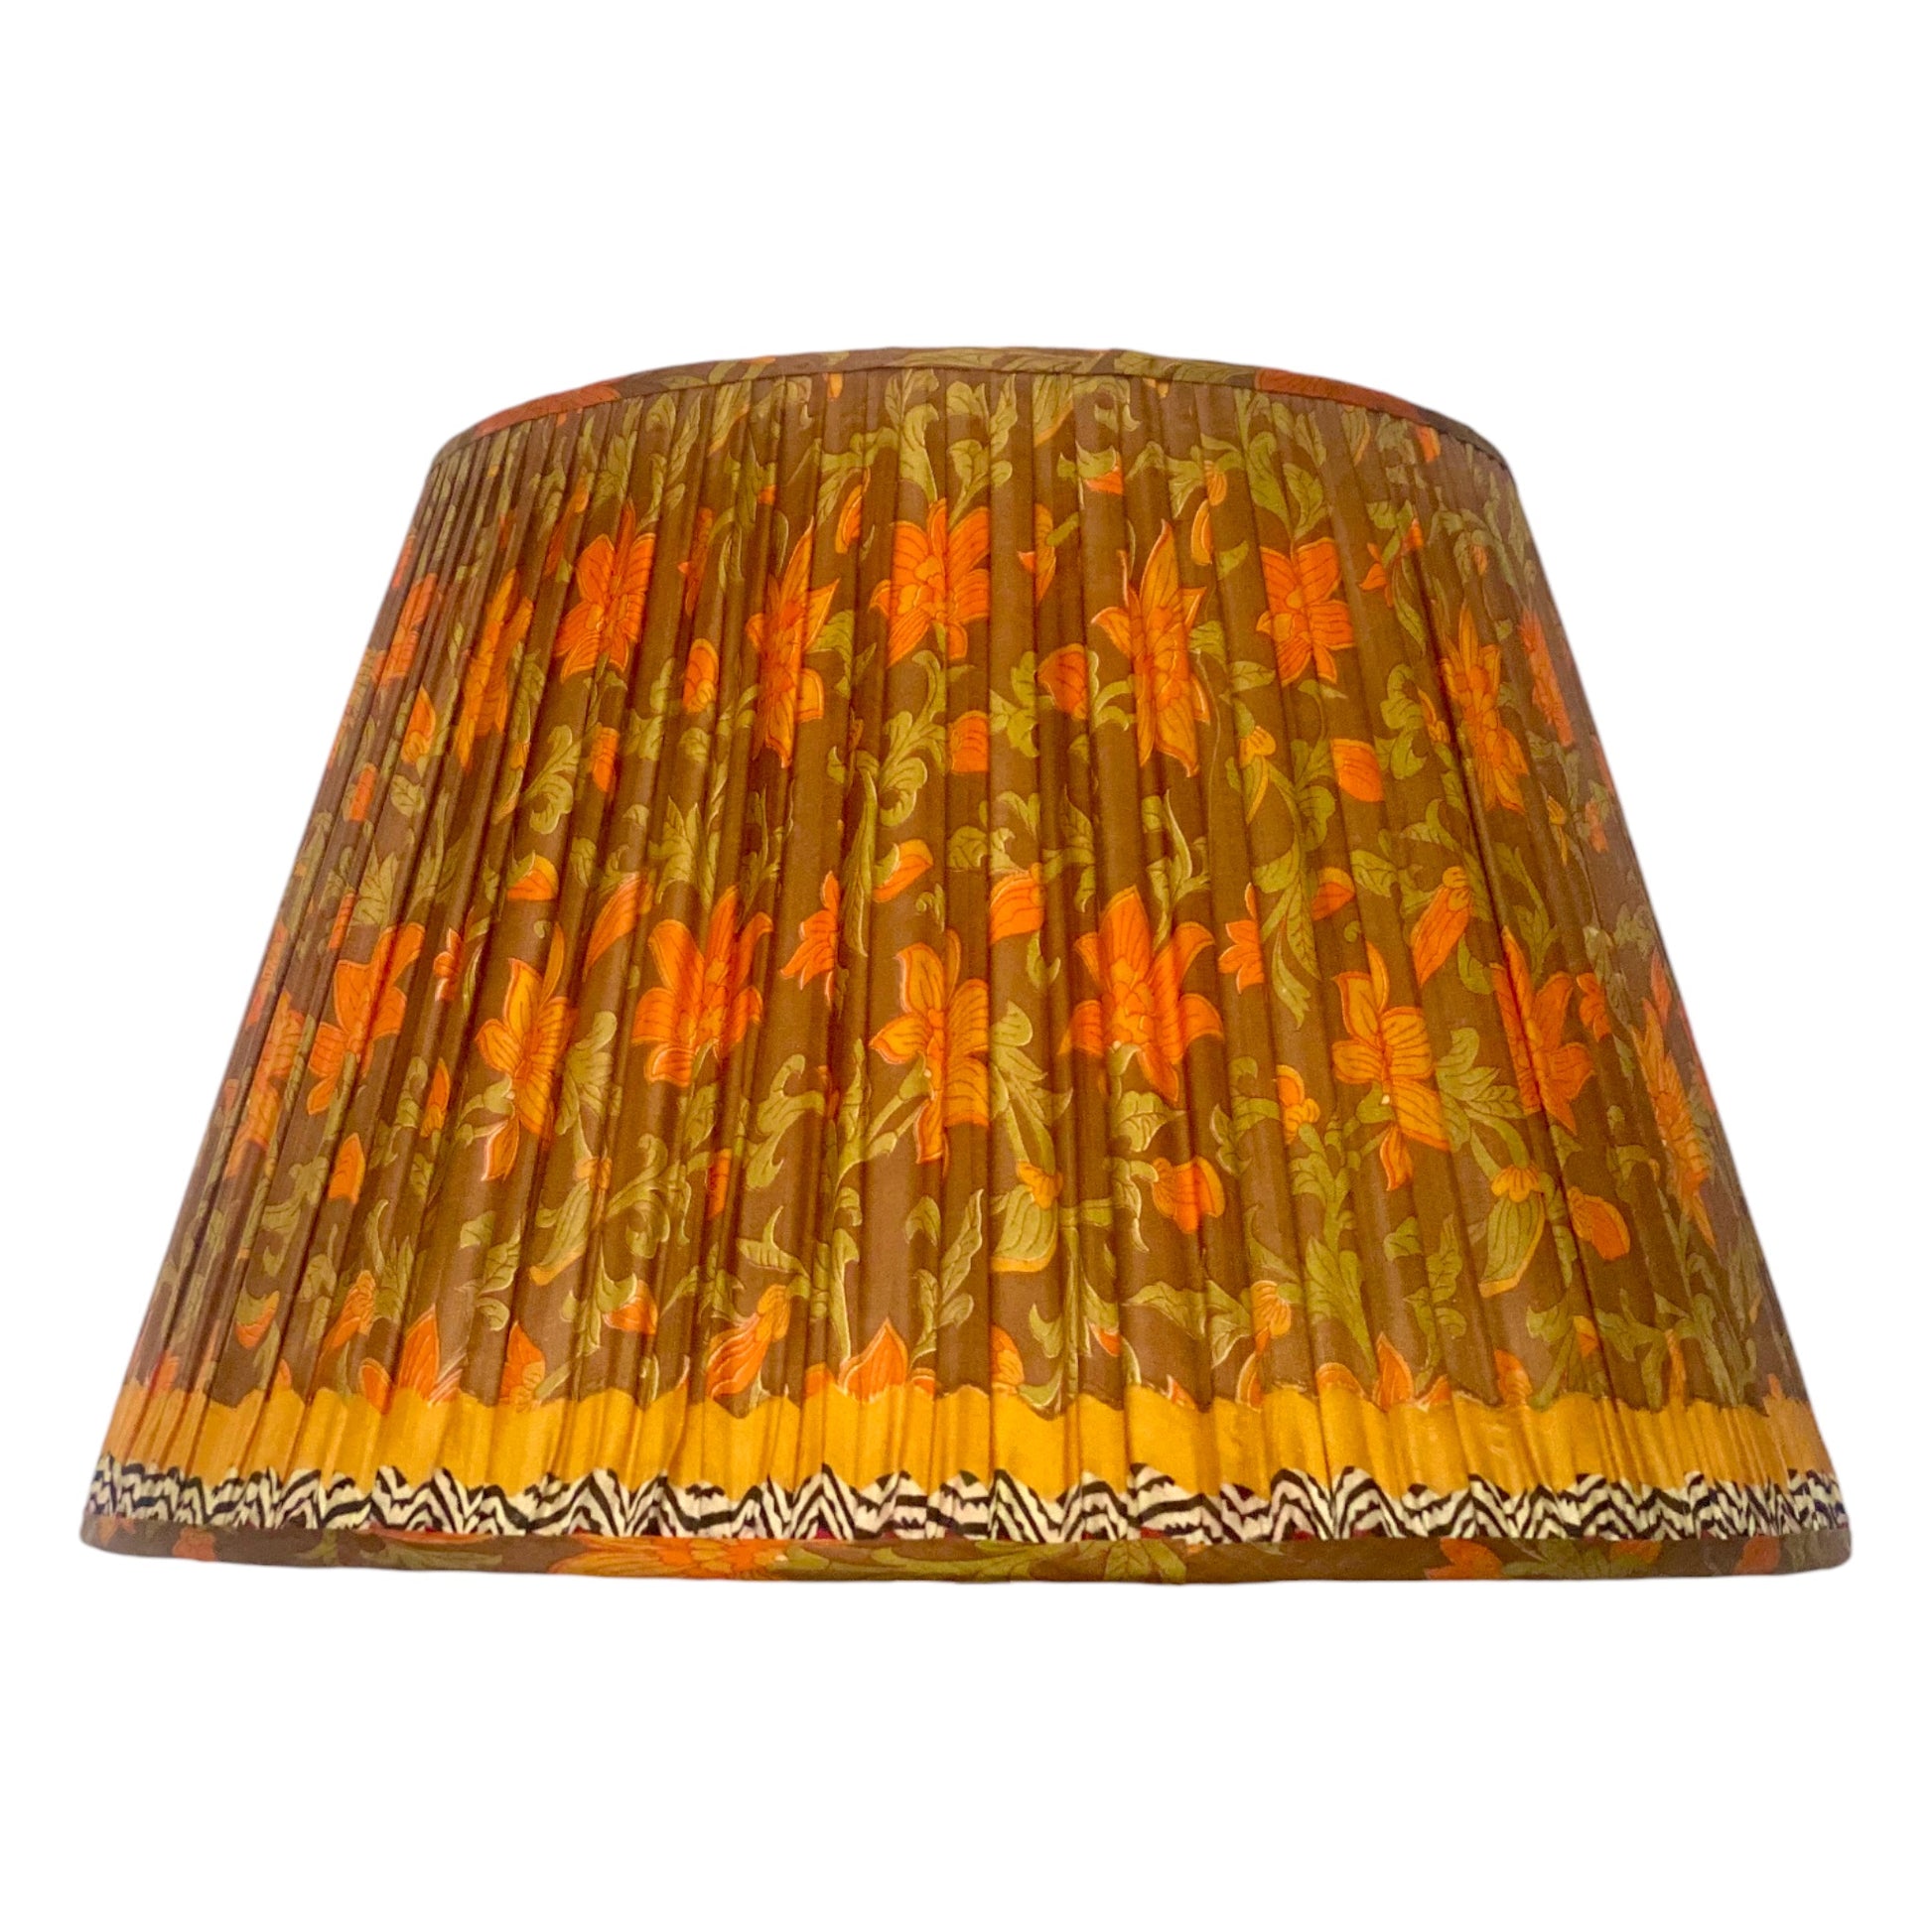 Orange and olive floral silk sari lampshade